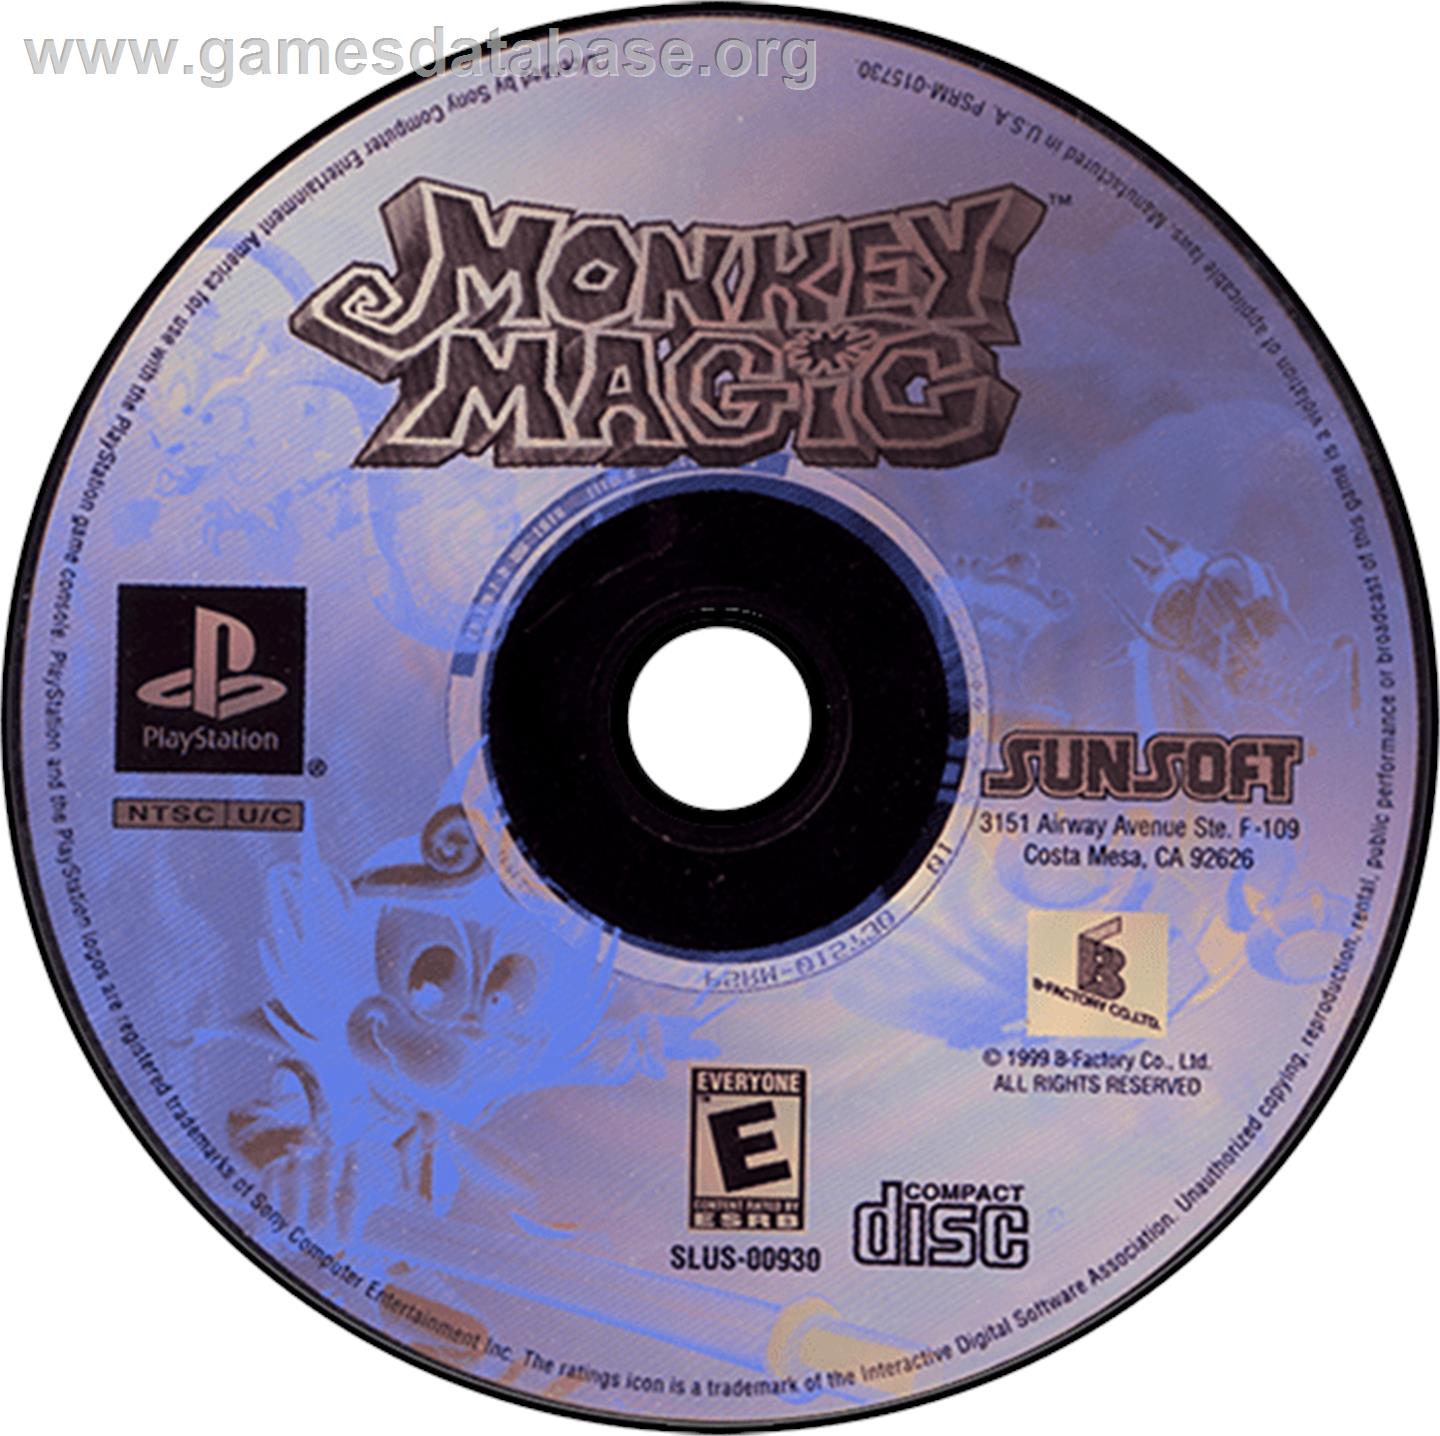 Monkey Magic - Sony Playstation - Artwork - Disc